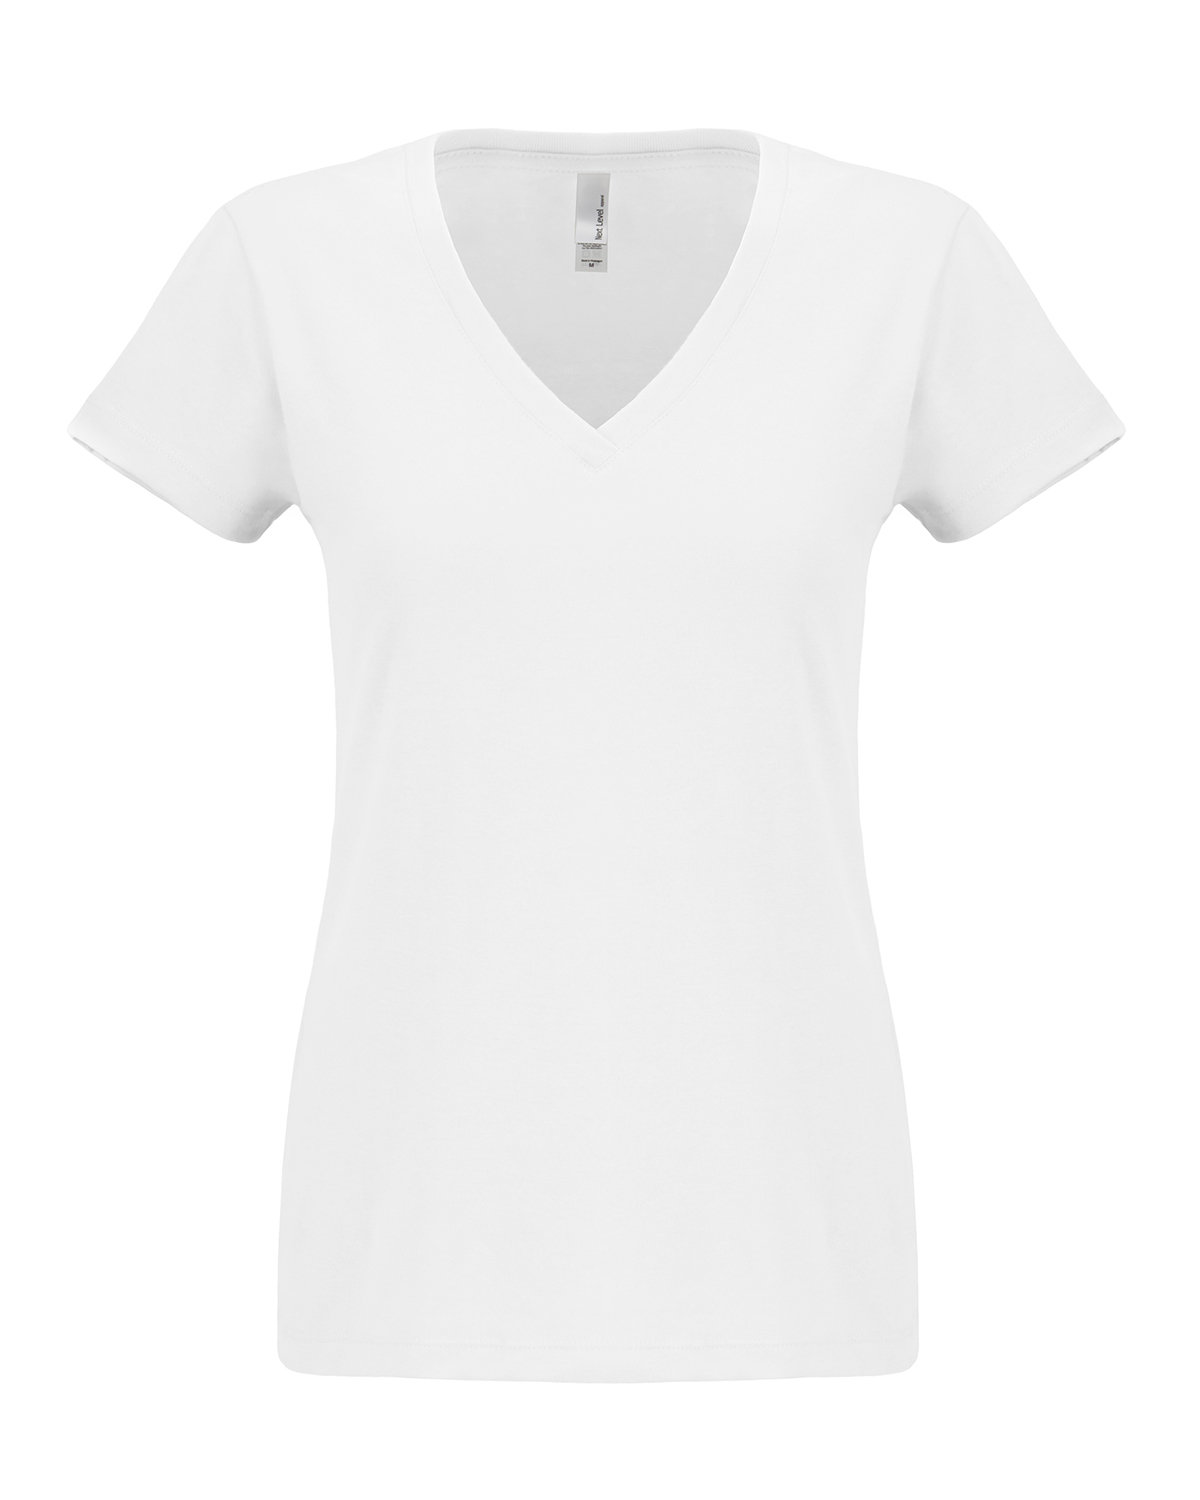 Next Level Ladies' Sueded V-Neck T-Shirt WHITE 